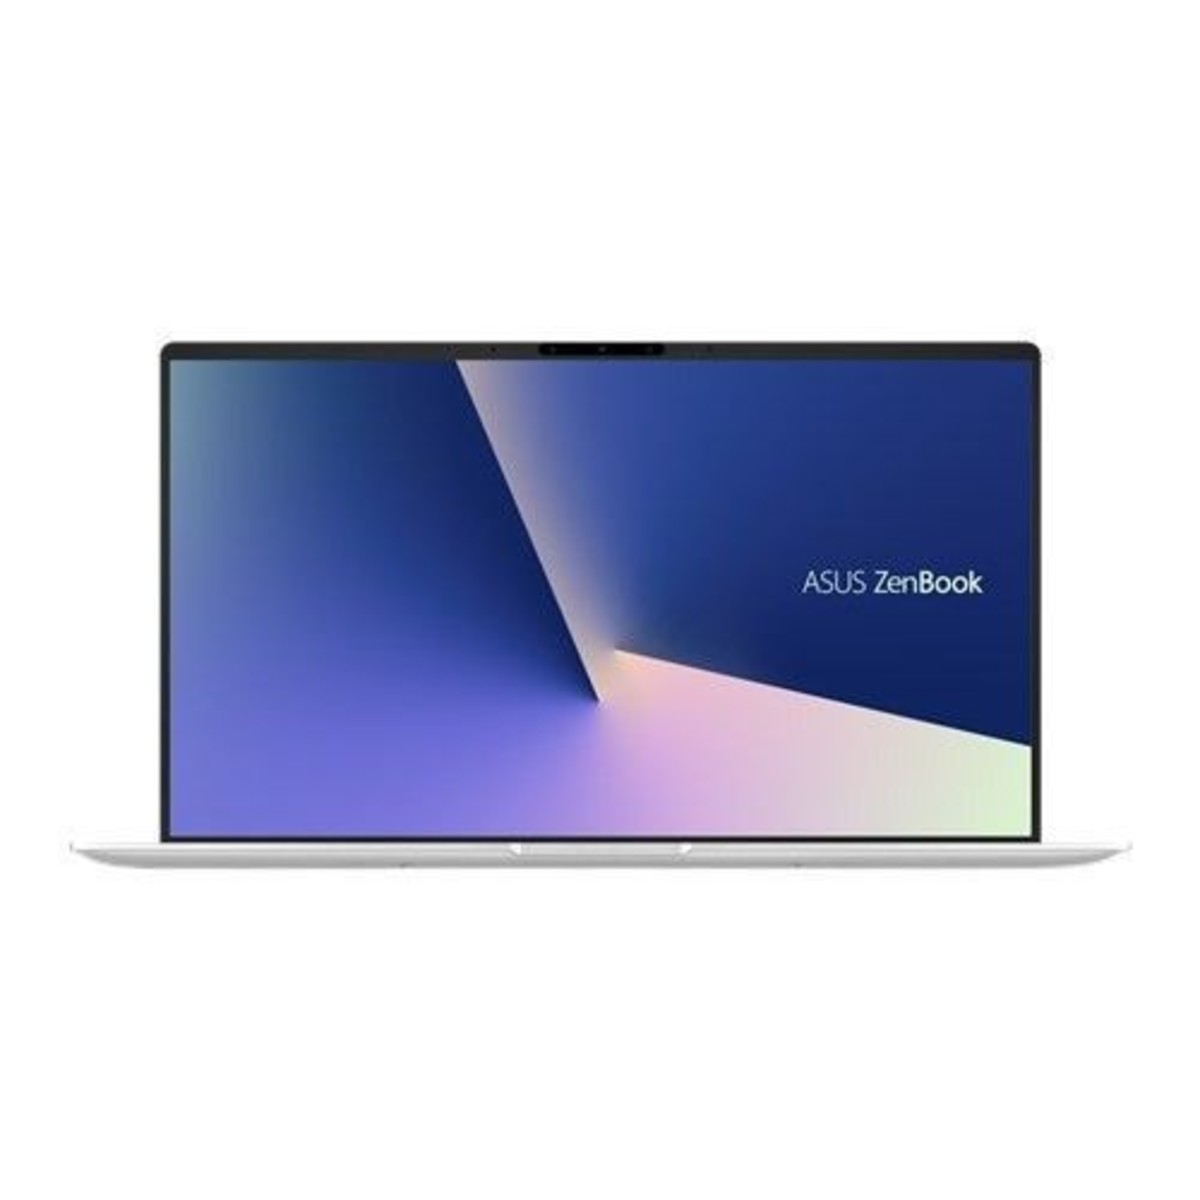 ASUS ZenBook UX433FN-A5028TS  8th Gen Intel Core I7-8565U 1.8GHz,16GB,512GB SSD,NVIDIA GeForce MX150 2GB,14 Inch FHD,Silver